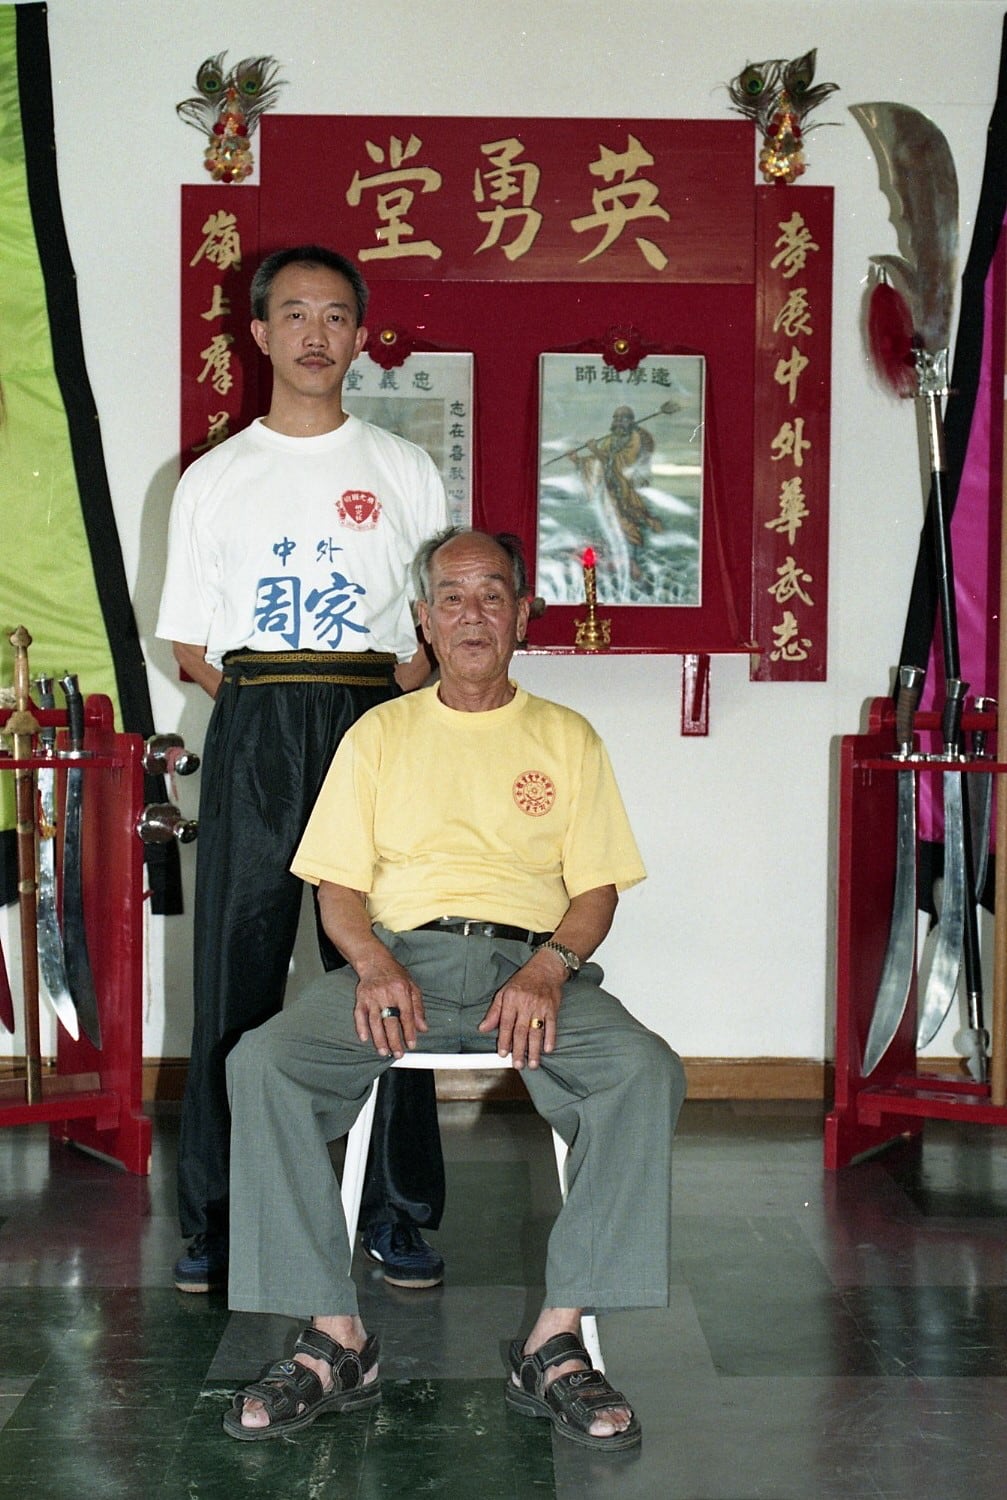 Ein Foto mit Meister Zhou Jinbo und Meister Seet Chor Thong in der Siegener Ying Yong Tang Schule